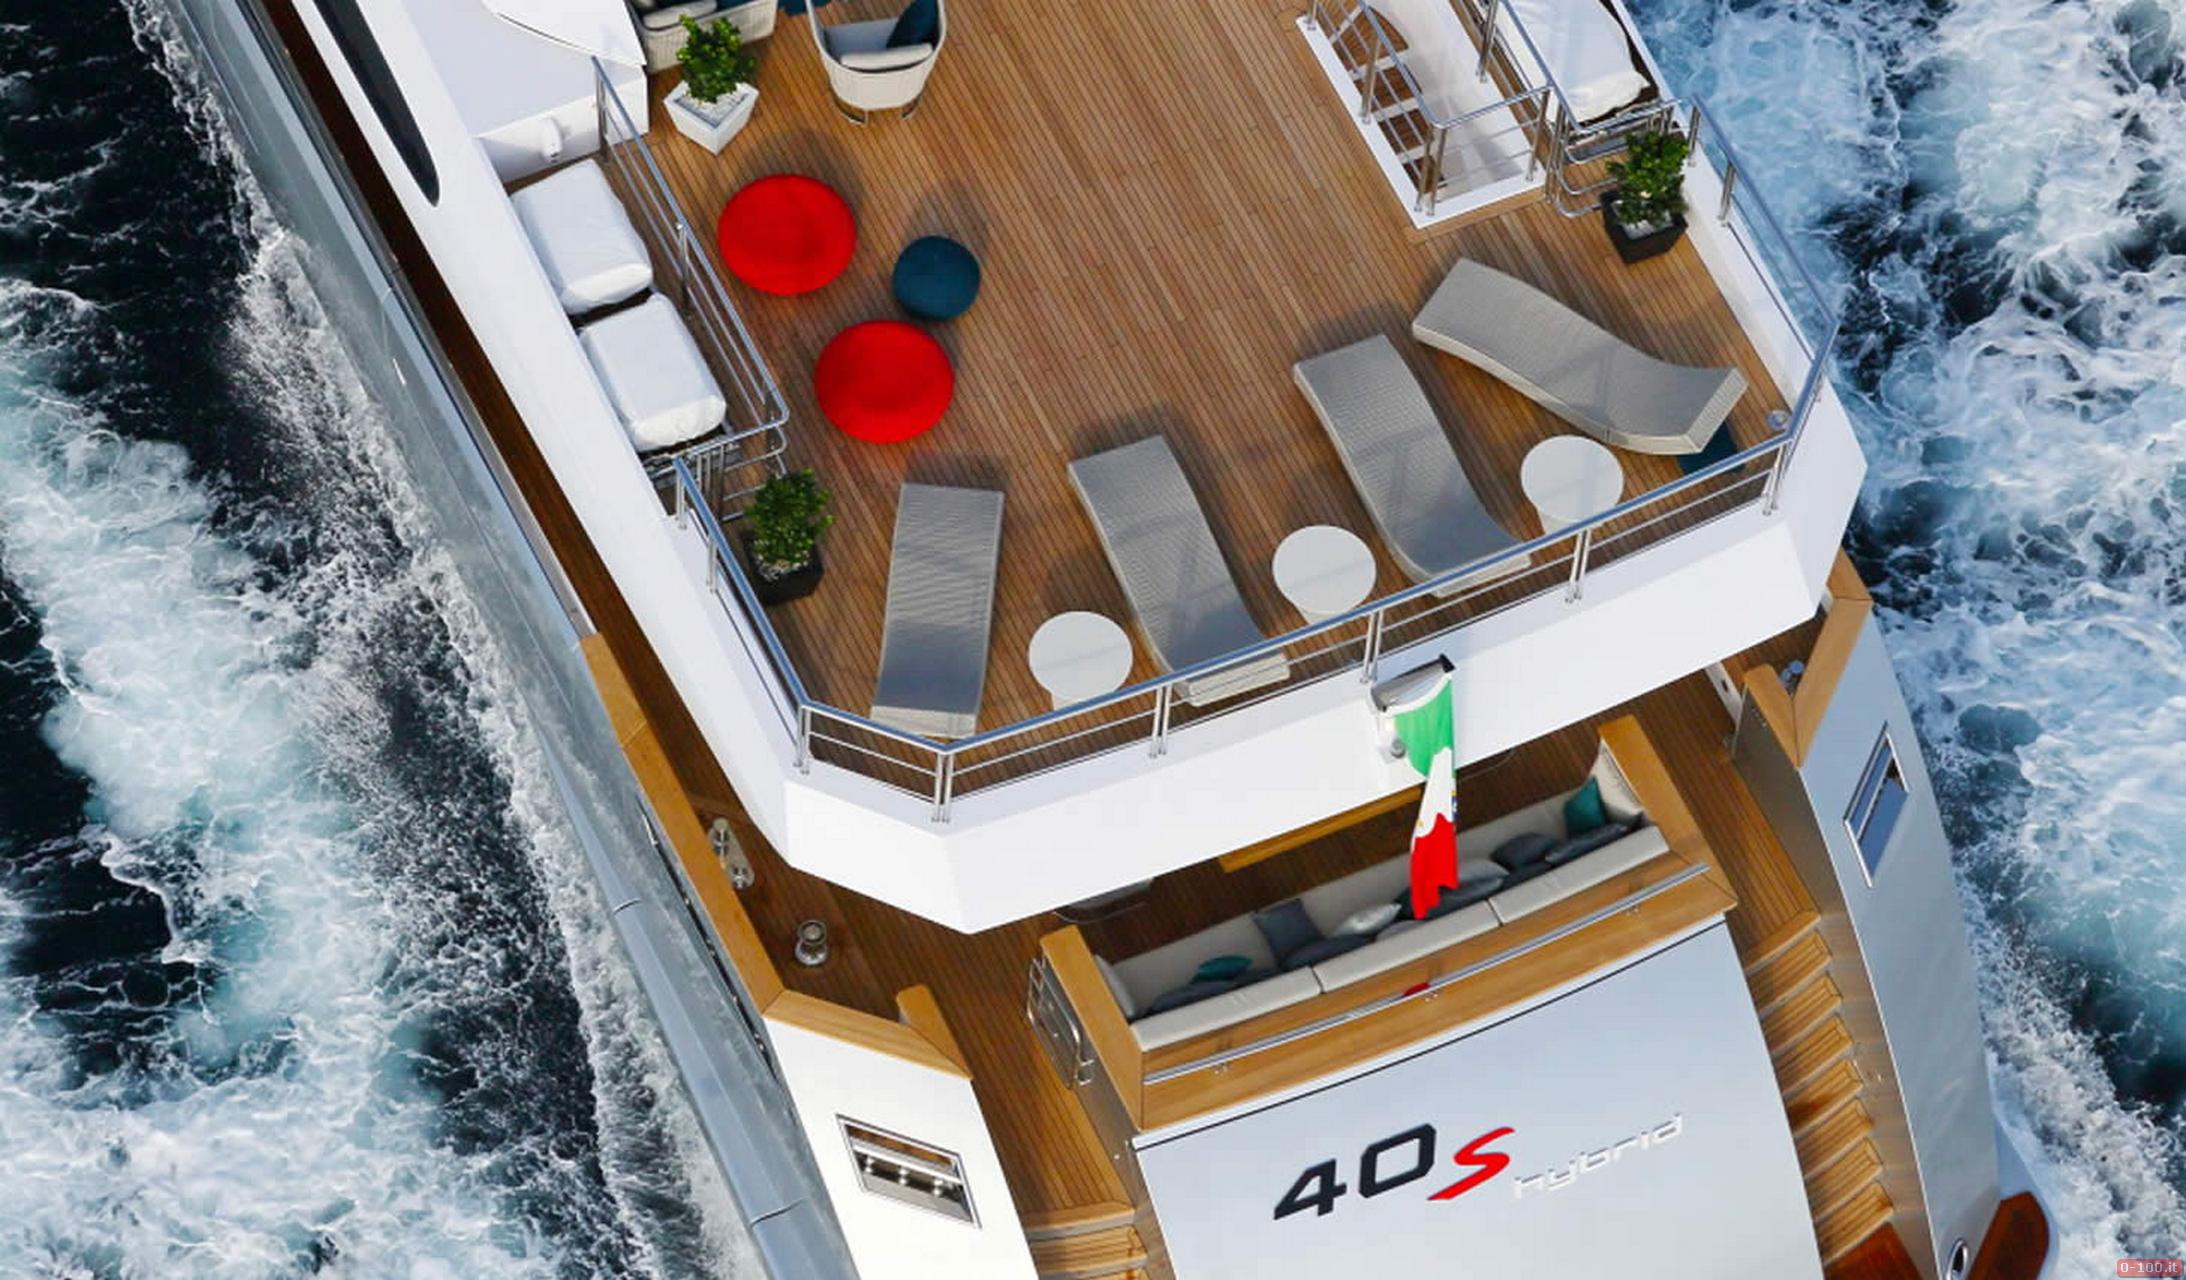 showboat-design-awards-2014-lo-yacht-columbus-40s-hybrid-sergio-cutolo-trionfa-3-volte_0-10012